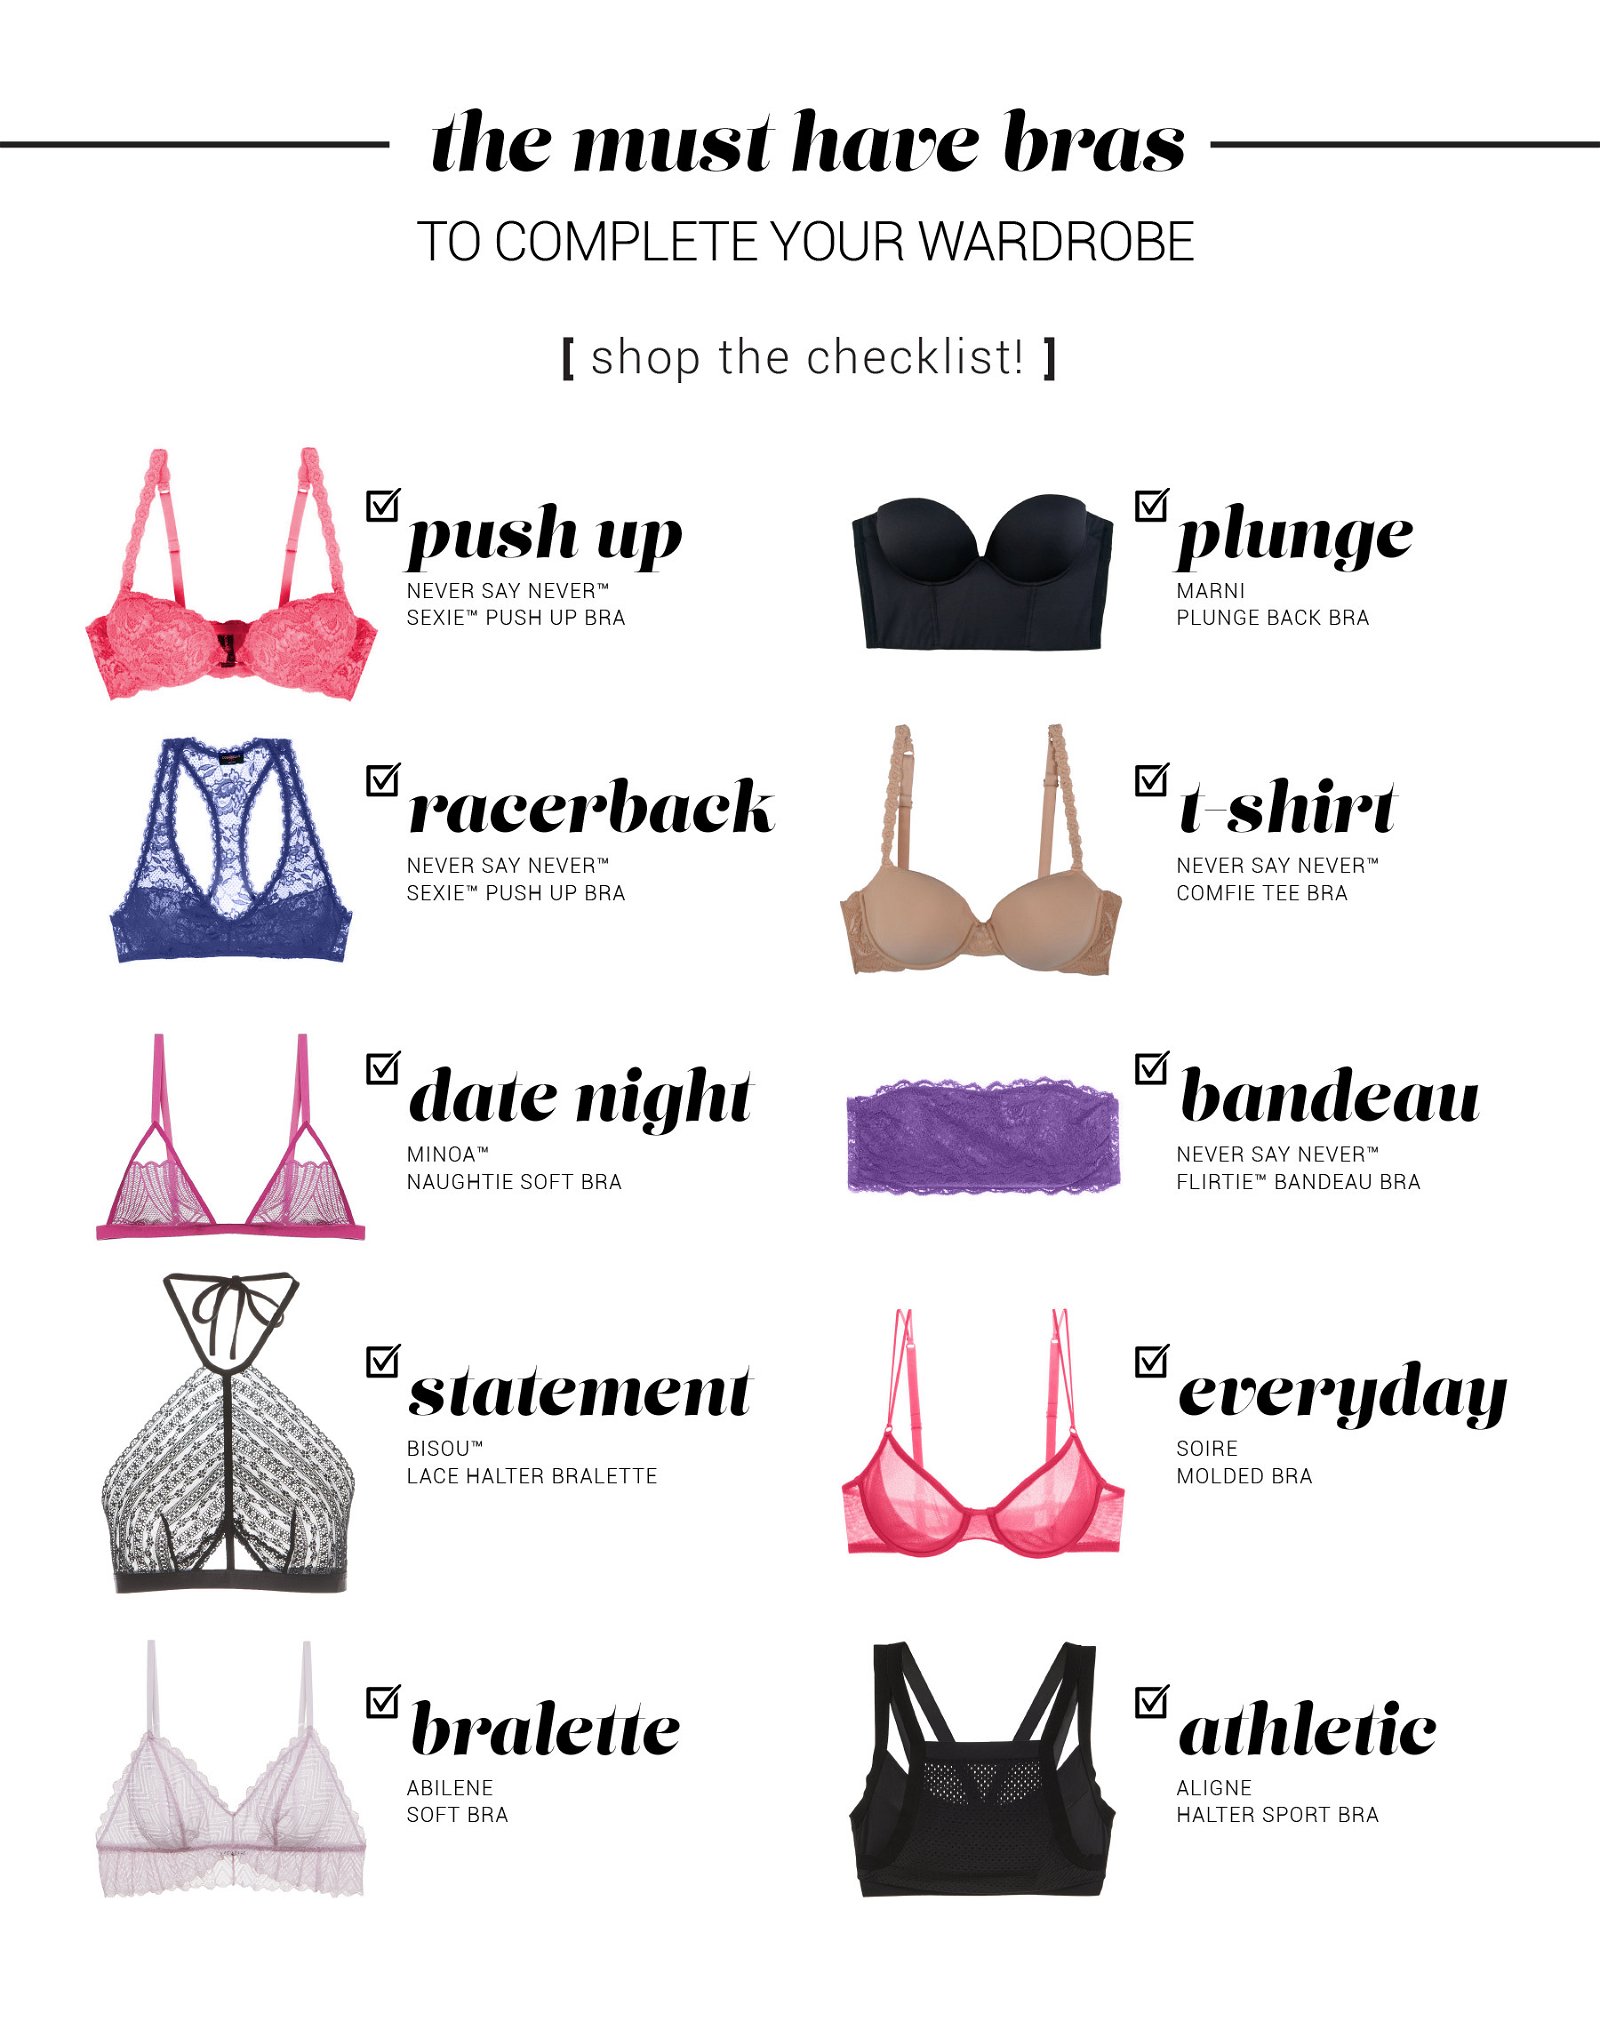 Building a bra wardrobe: This checklist includes the basic bra